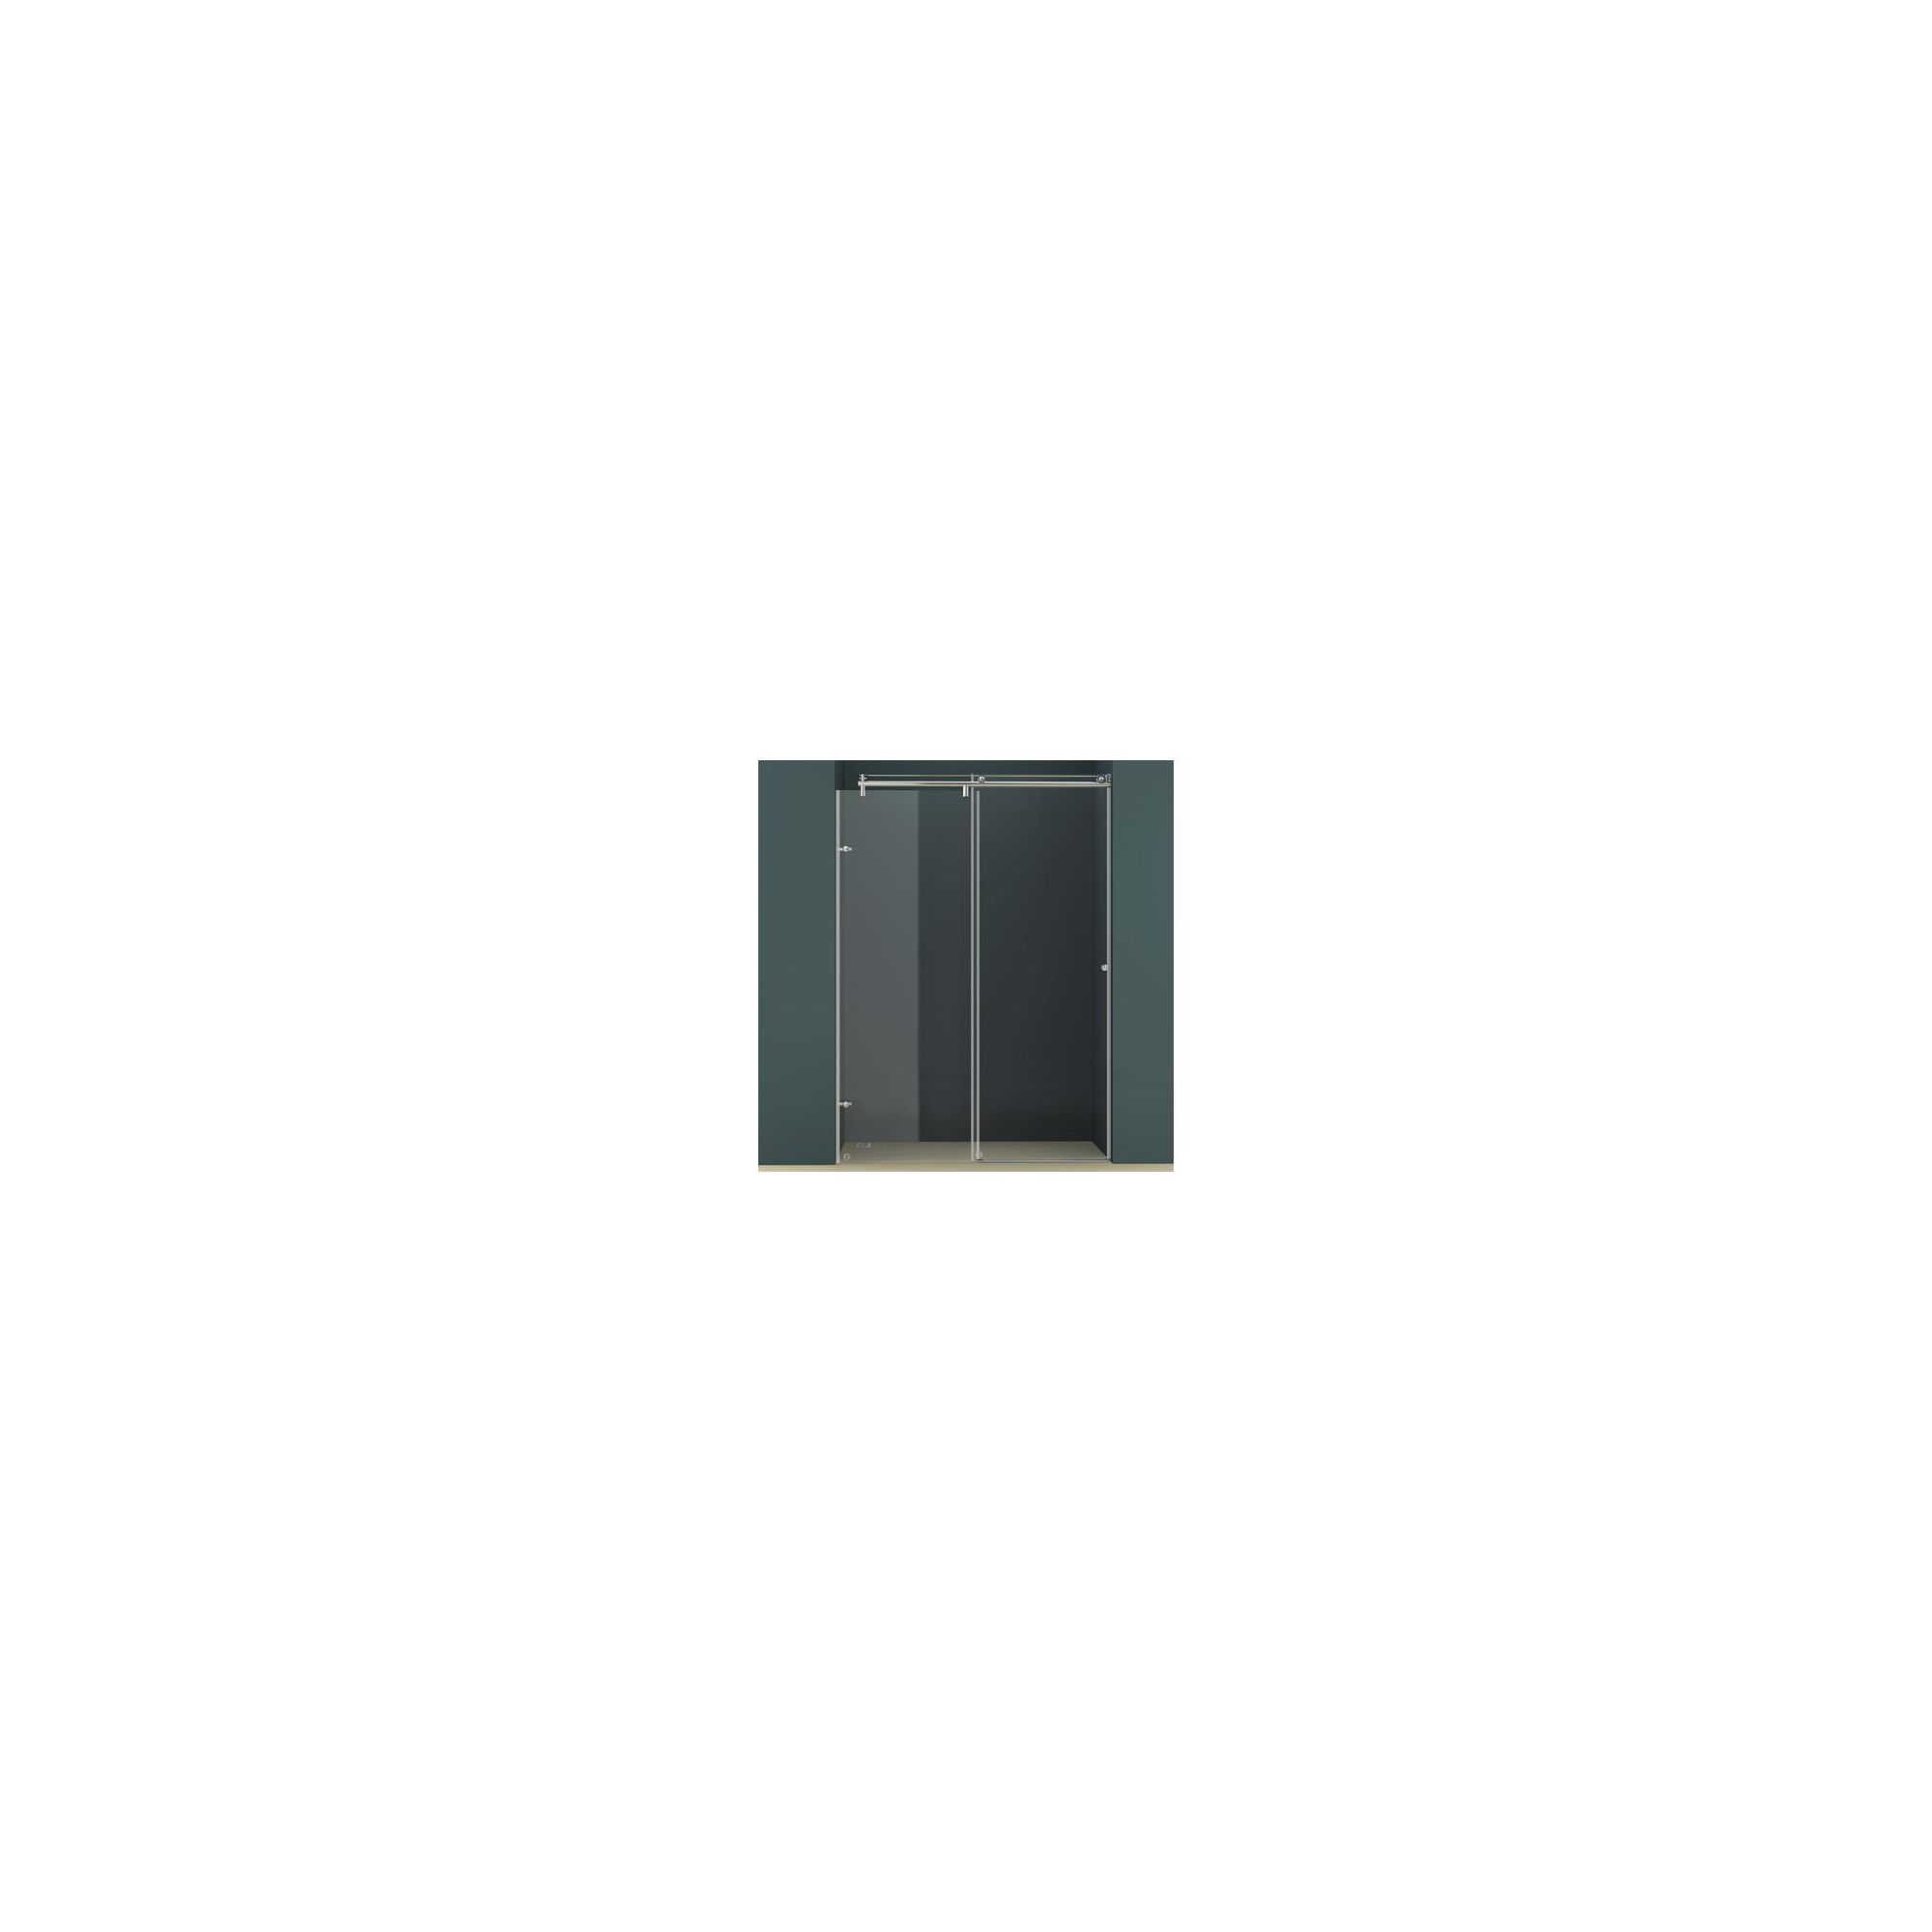 Vessini K Series Sliding Shower Door, 1600mm Wide, 10mm Glass at Tesco Direct